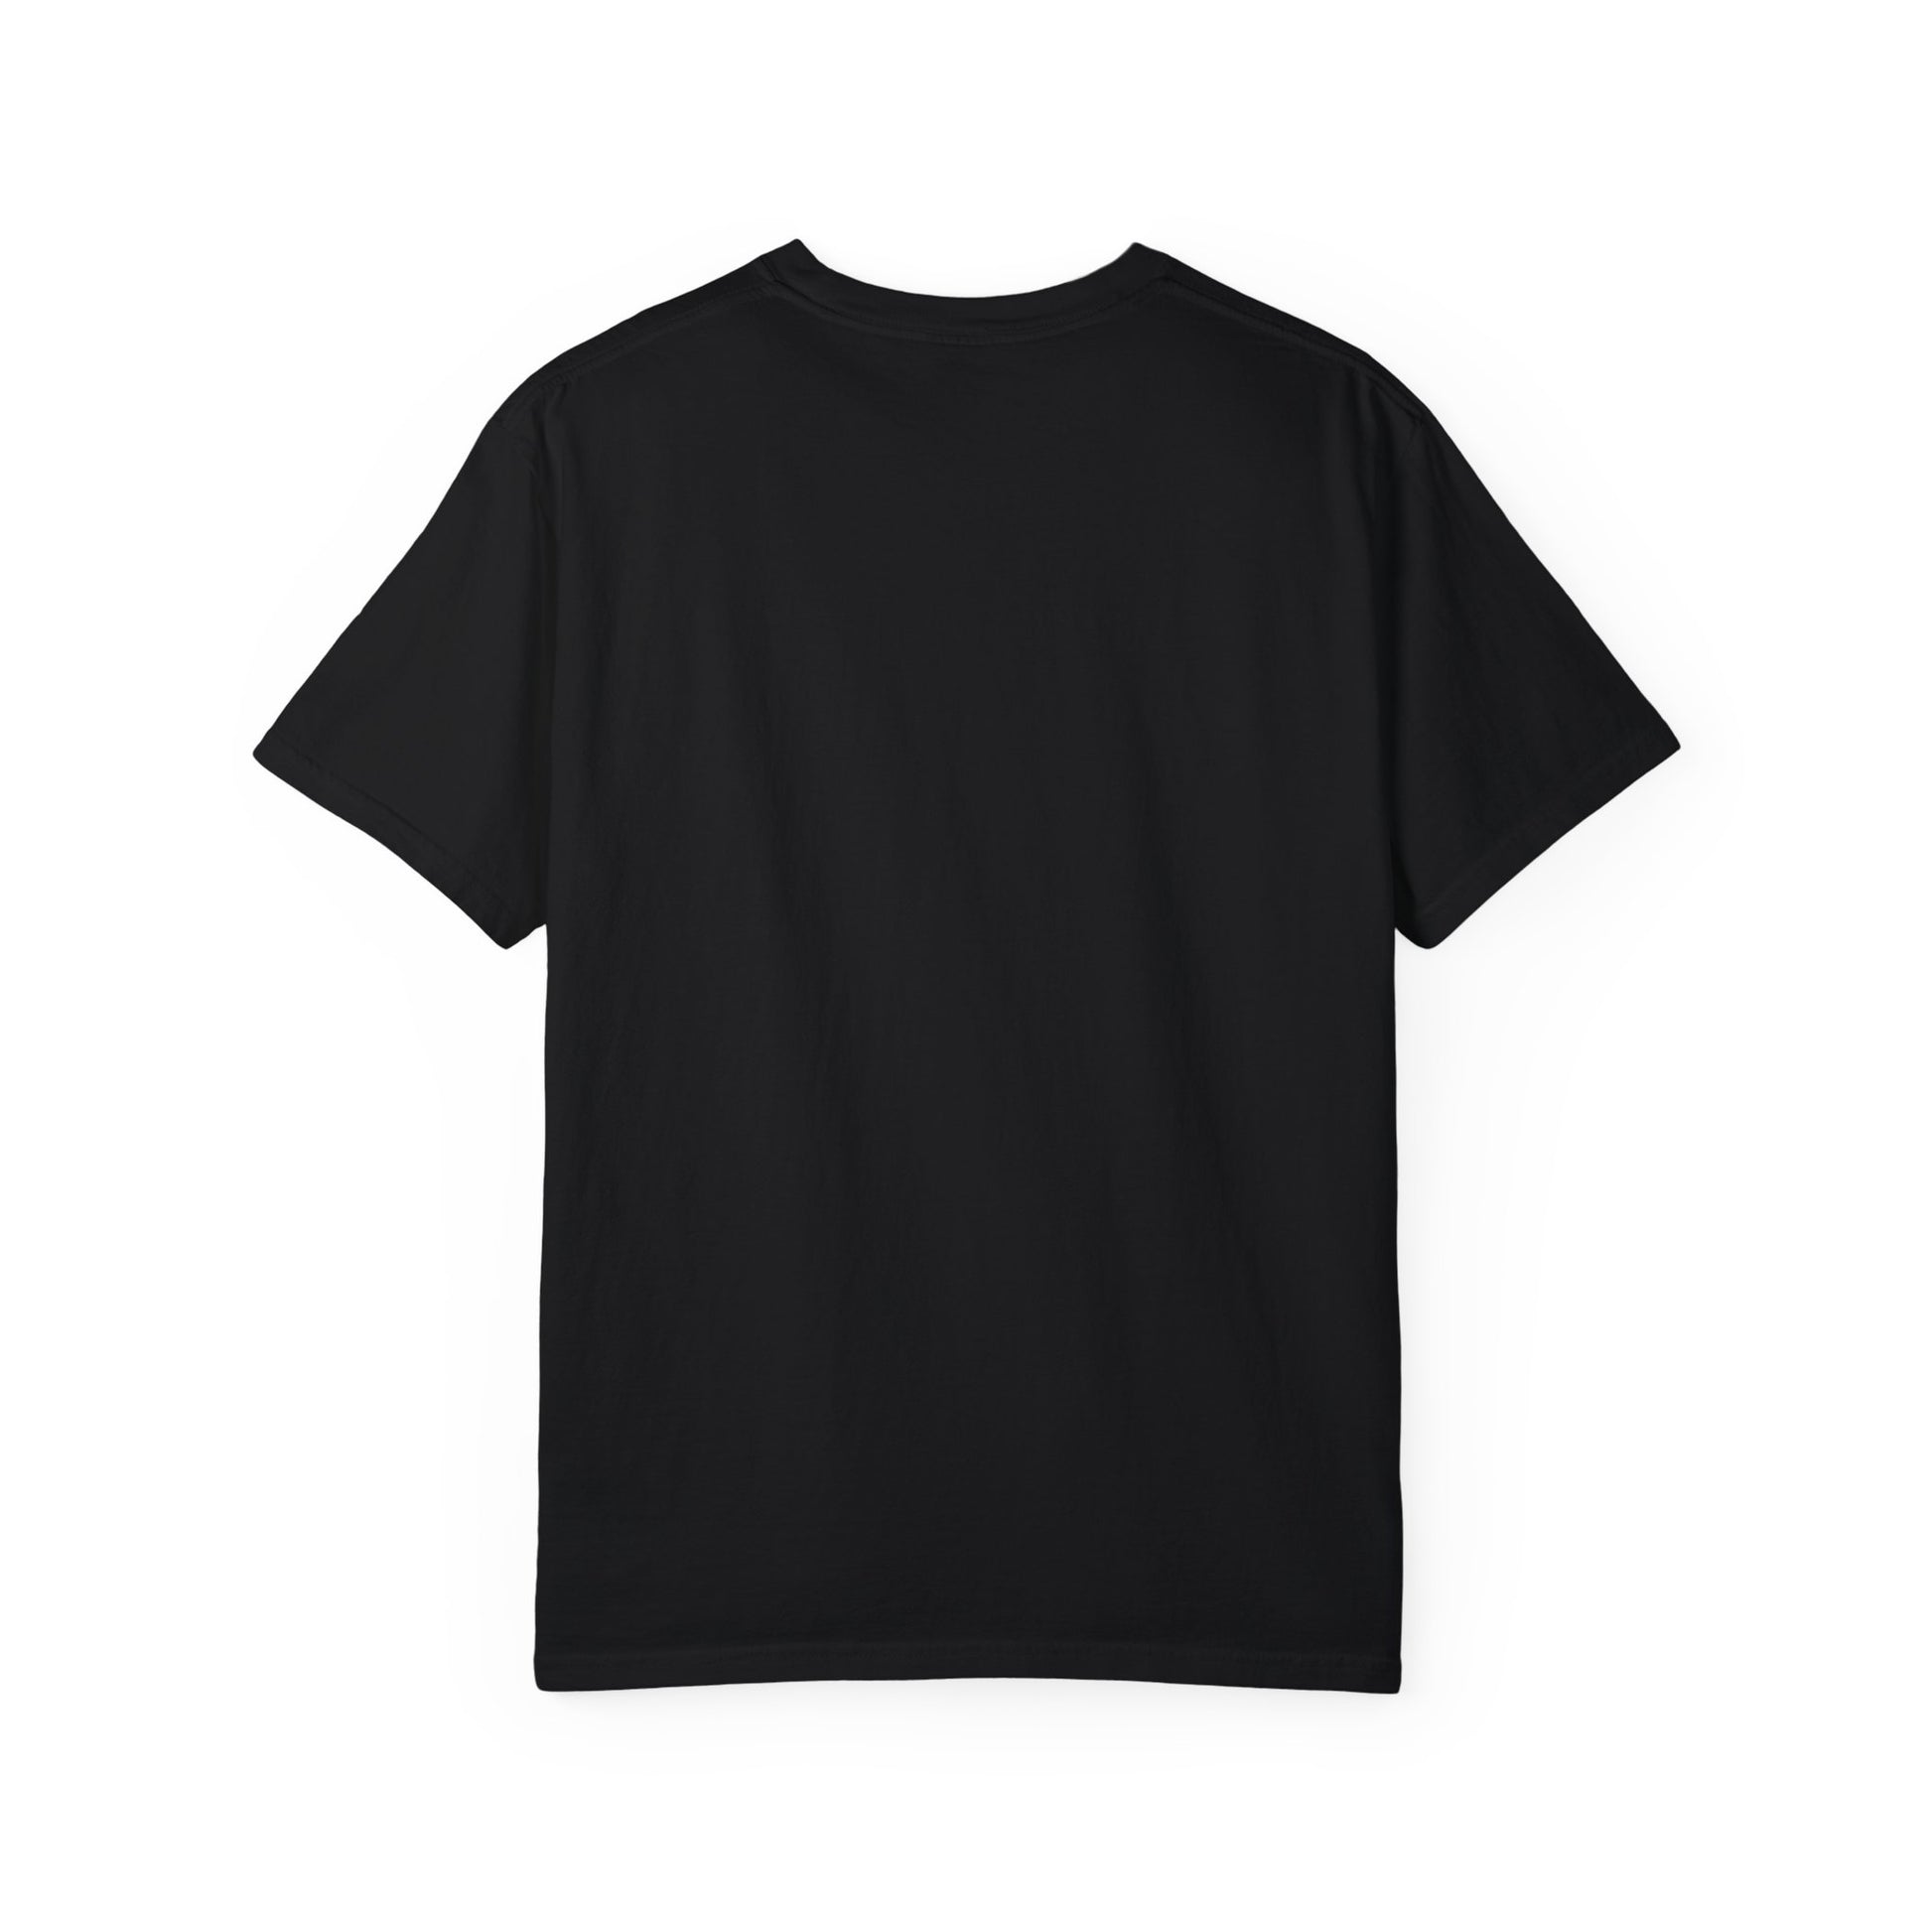 Lion Head Cool Graphic Design Novelty Unisex Garment-dyed T-shirt Cotton Funny Humorous Graphic Soft Premium Unisex Men Women Black T-shirt Birthday Gift-16